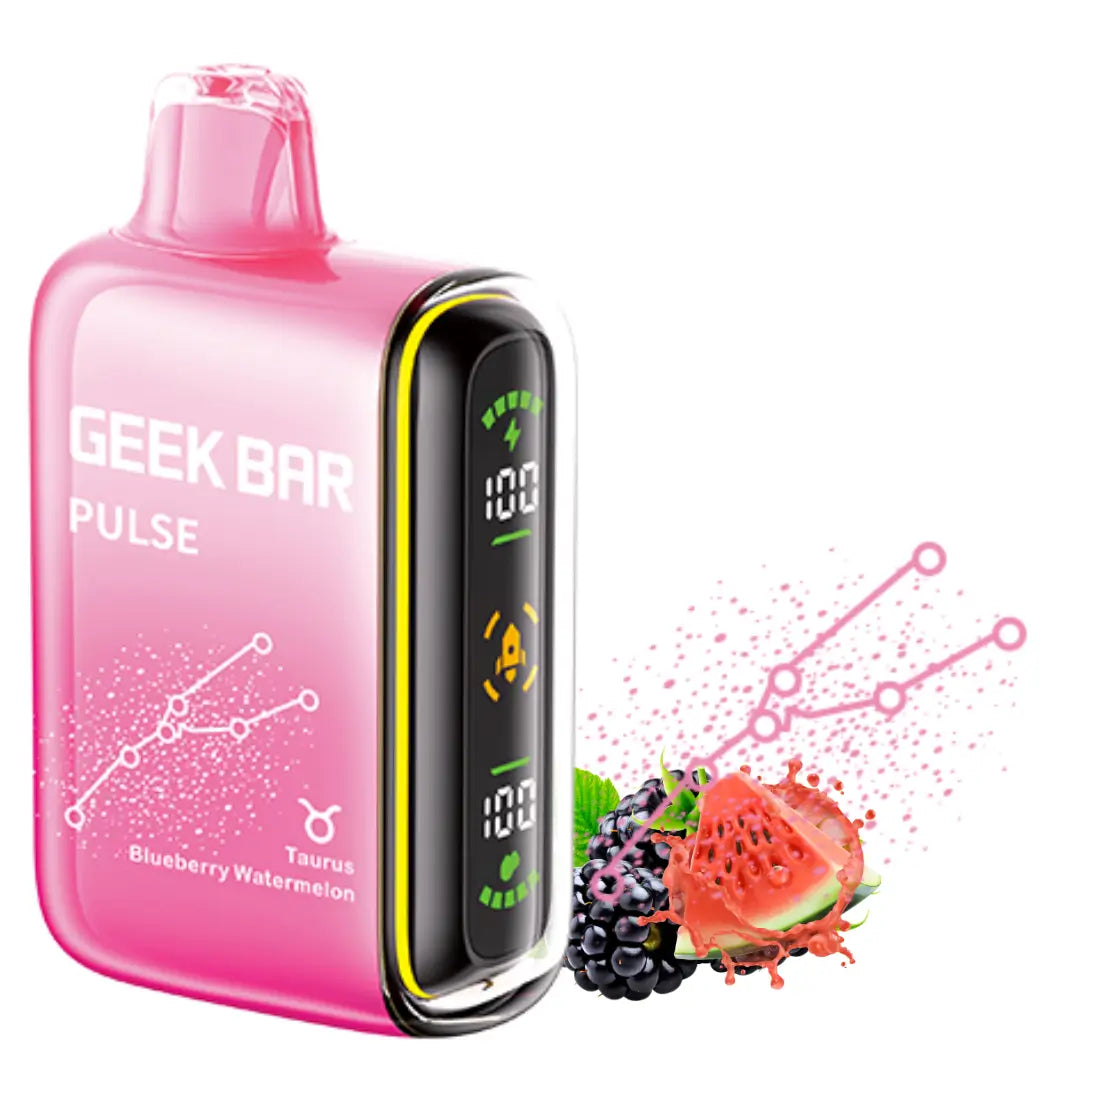 Geek Bar Pulse Washington Blueberry Watermelon